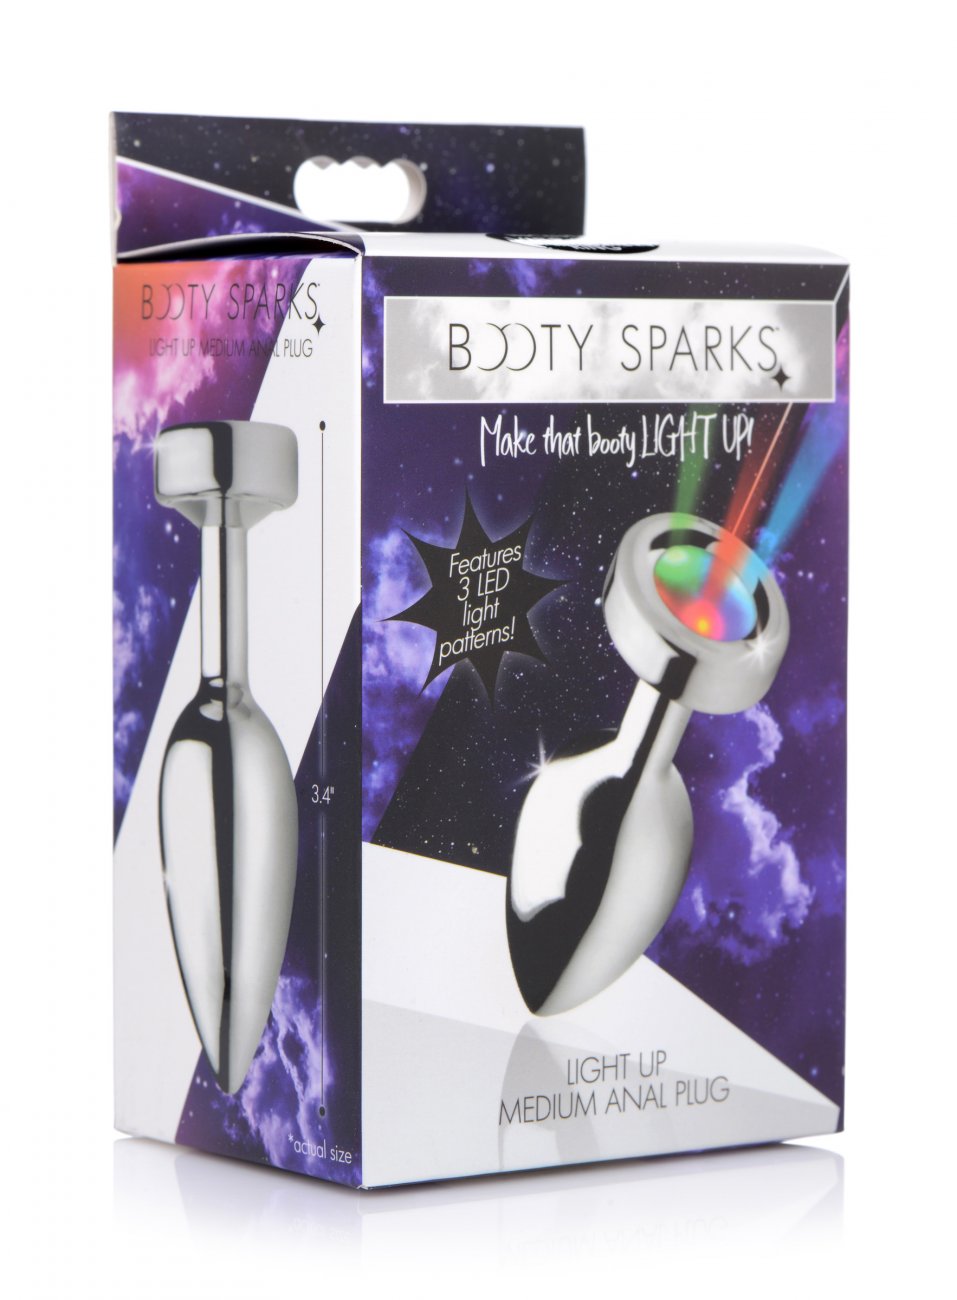 Booty Sparks Light Up LED Anal Plug - Medium- Silver Butt Plug